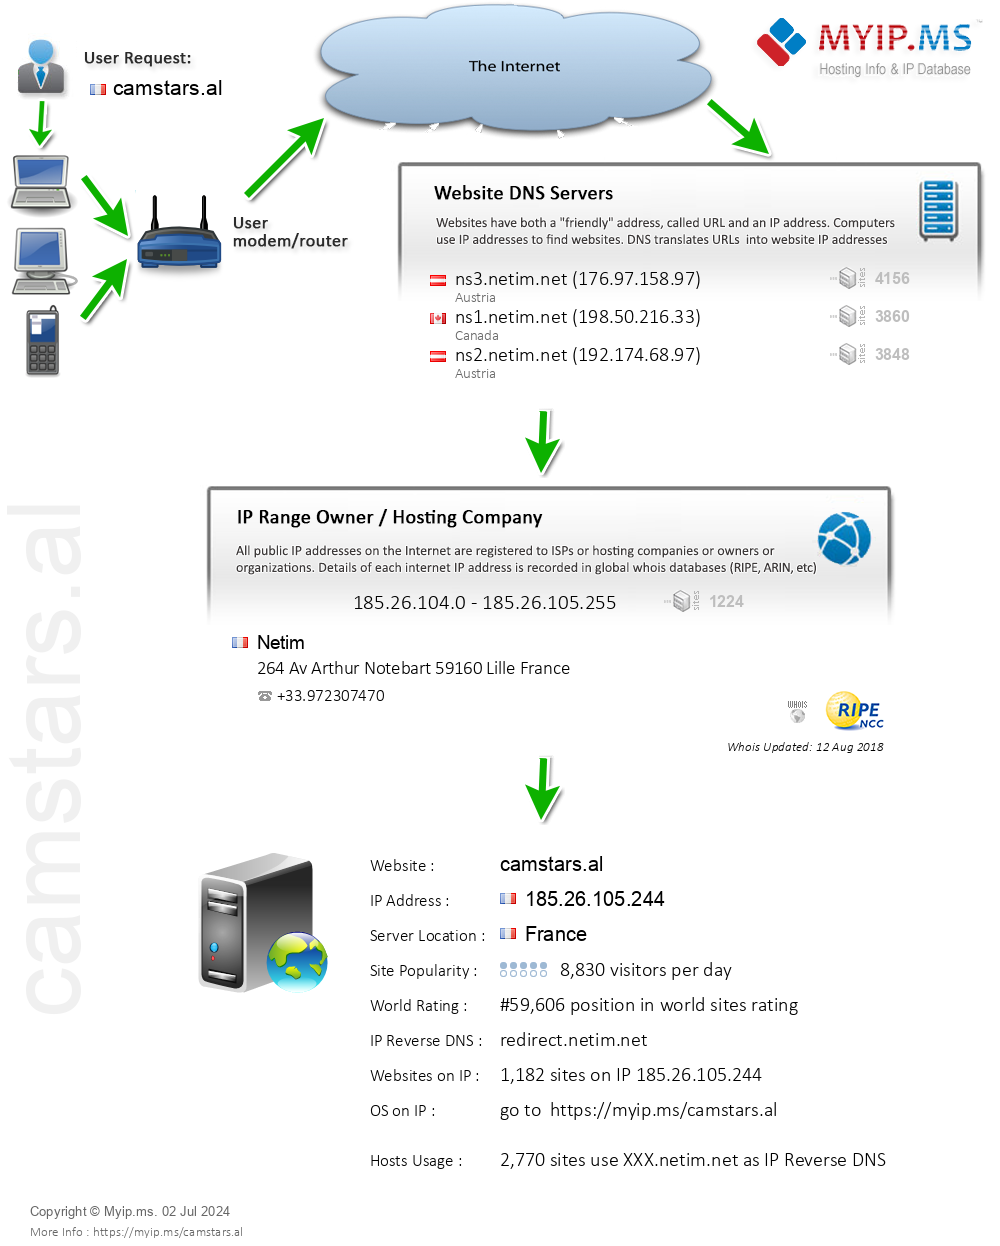 Camstars.al - Website Hosting Visual IP Diagram